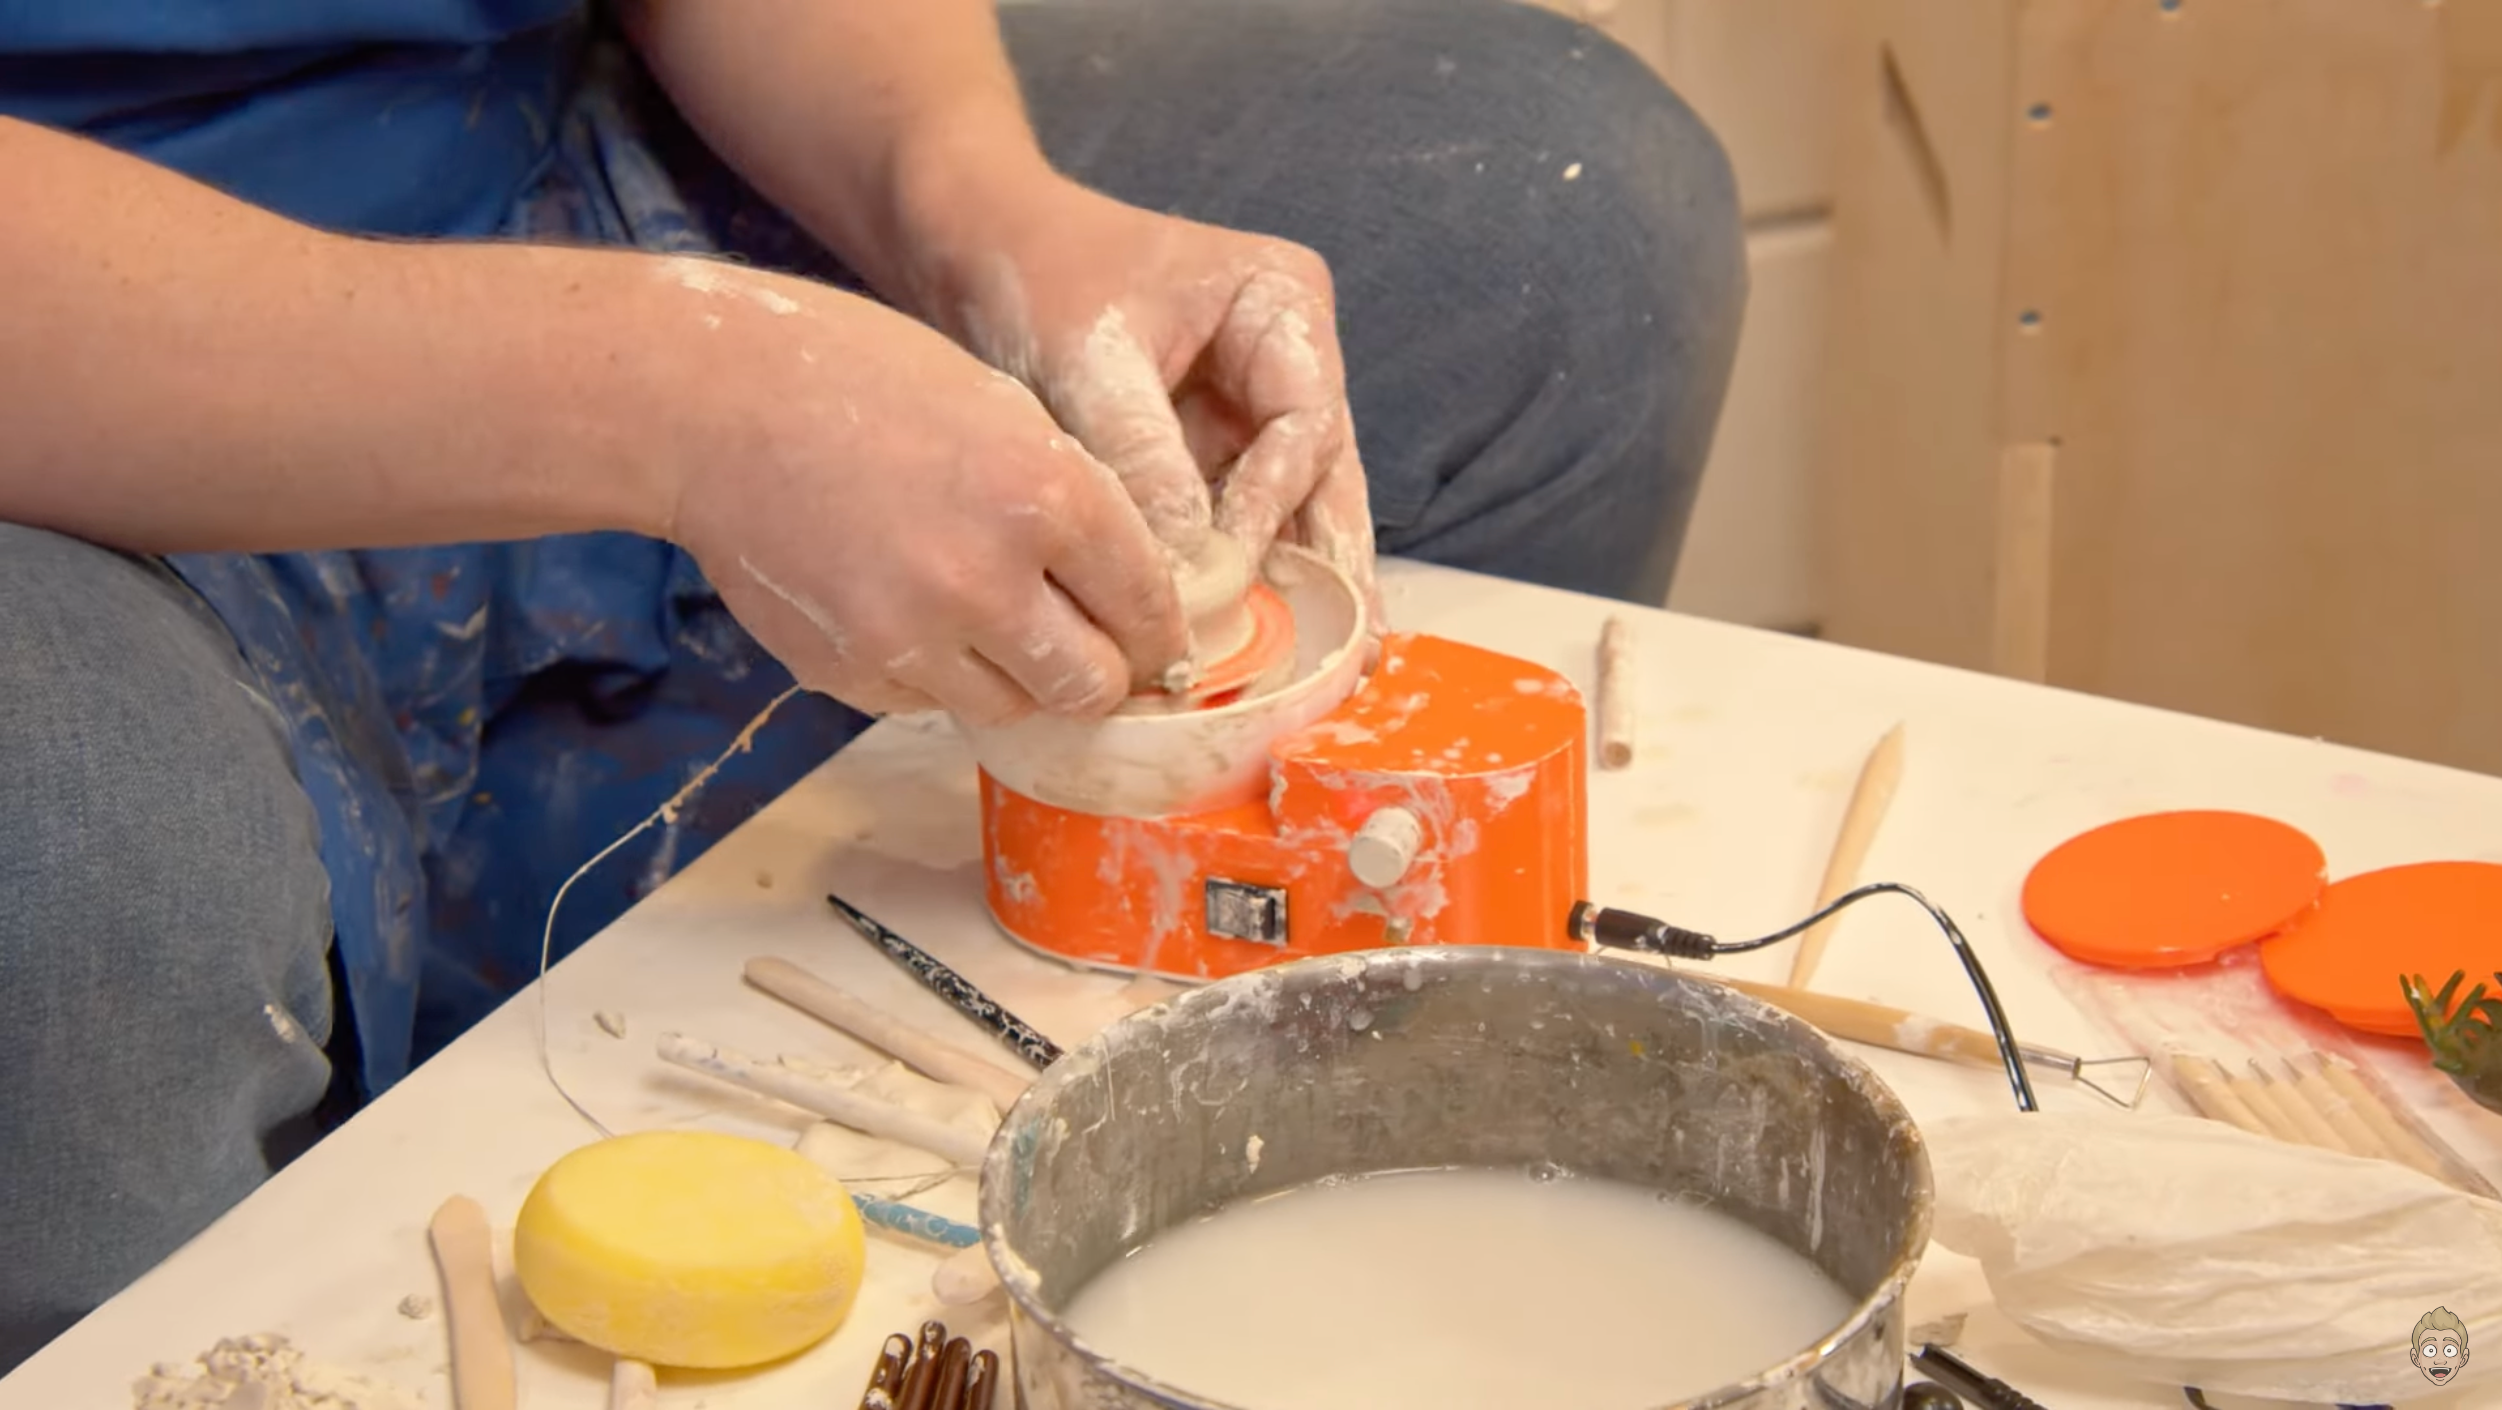 Load video: man using a miniature pottery wheel